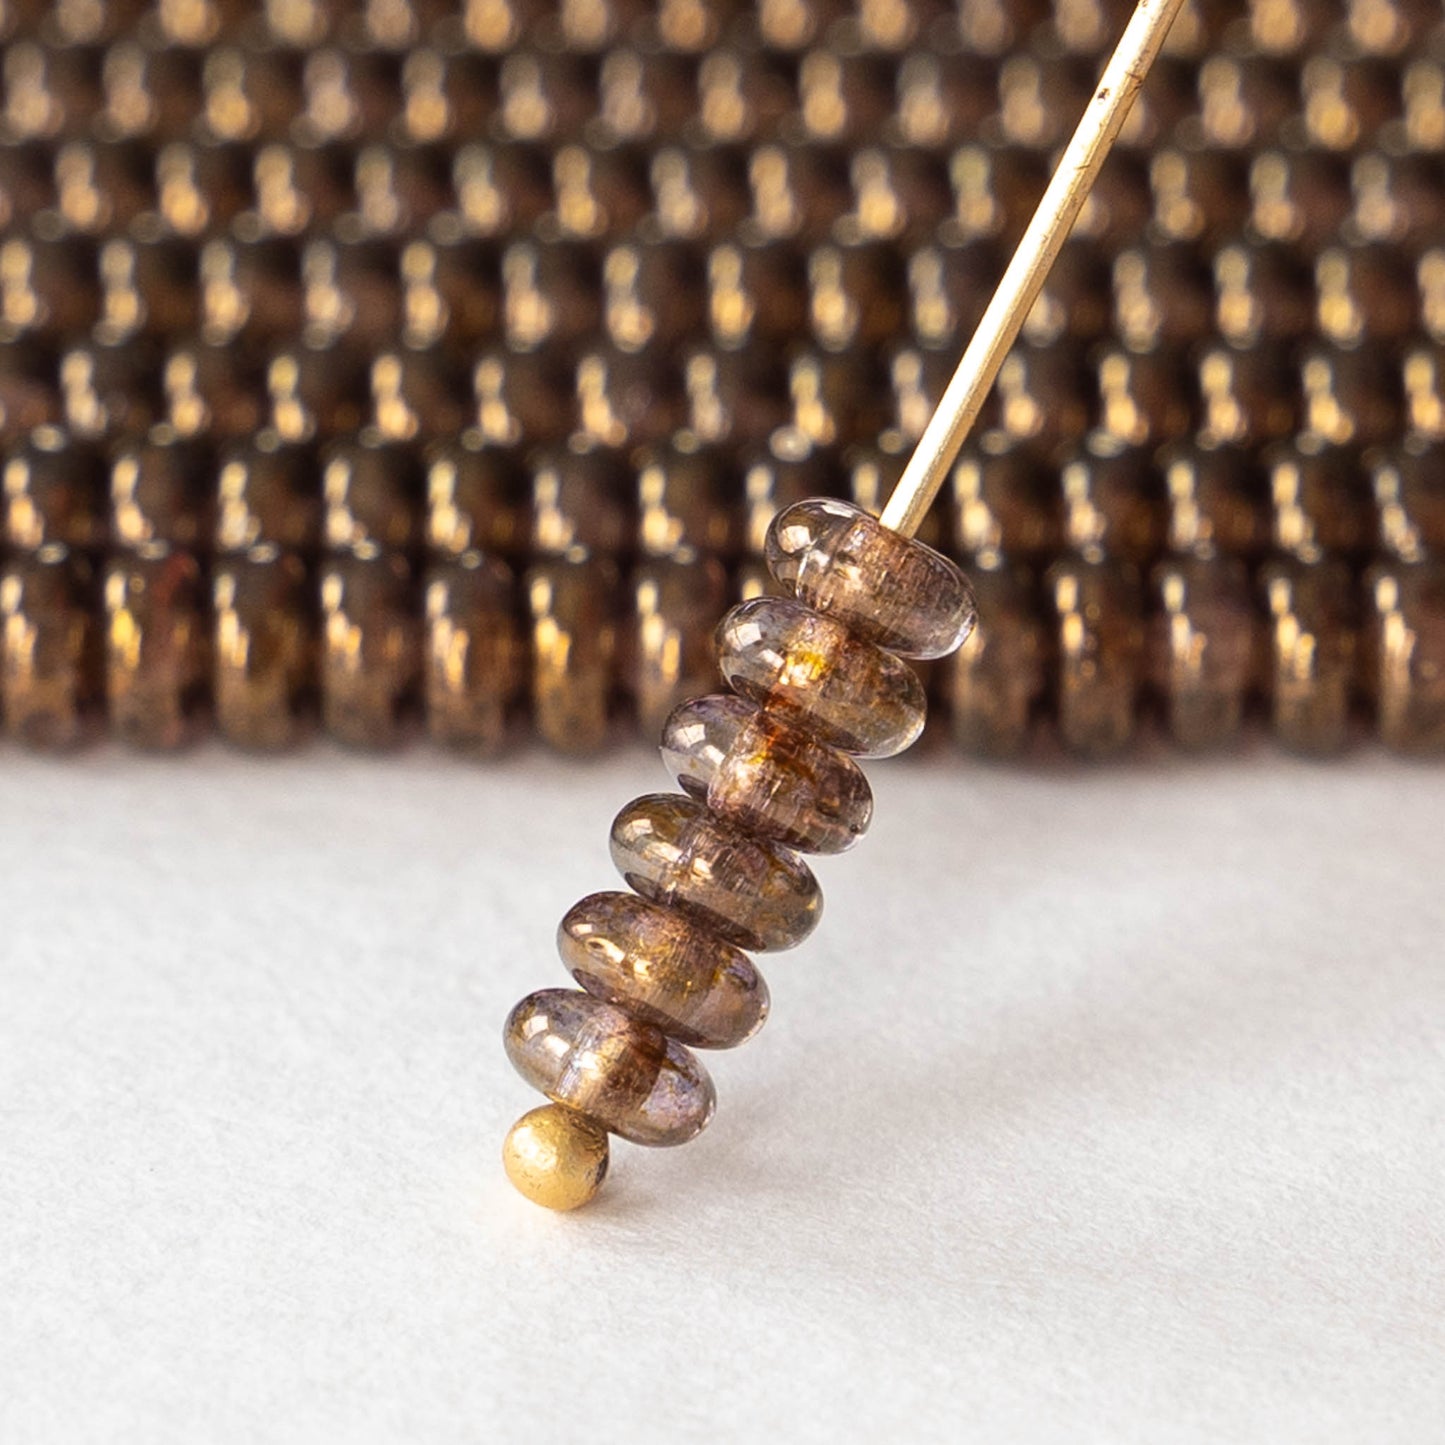 4mm Rondelle Beads - Bronze Luster - 100 Beads